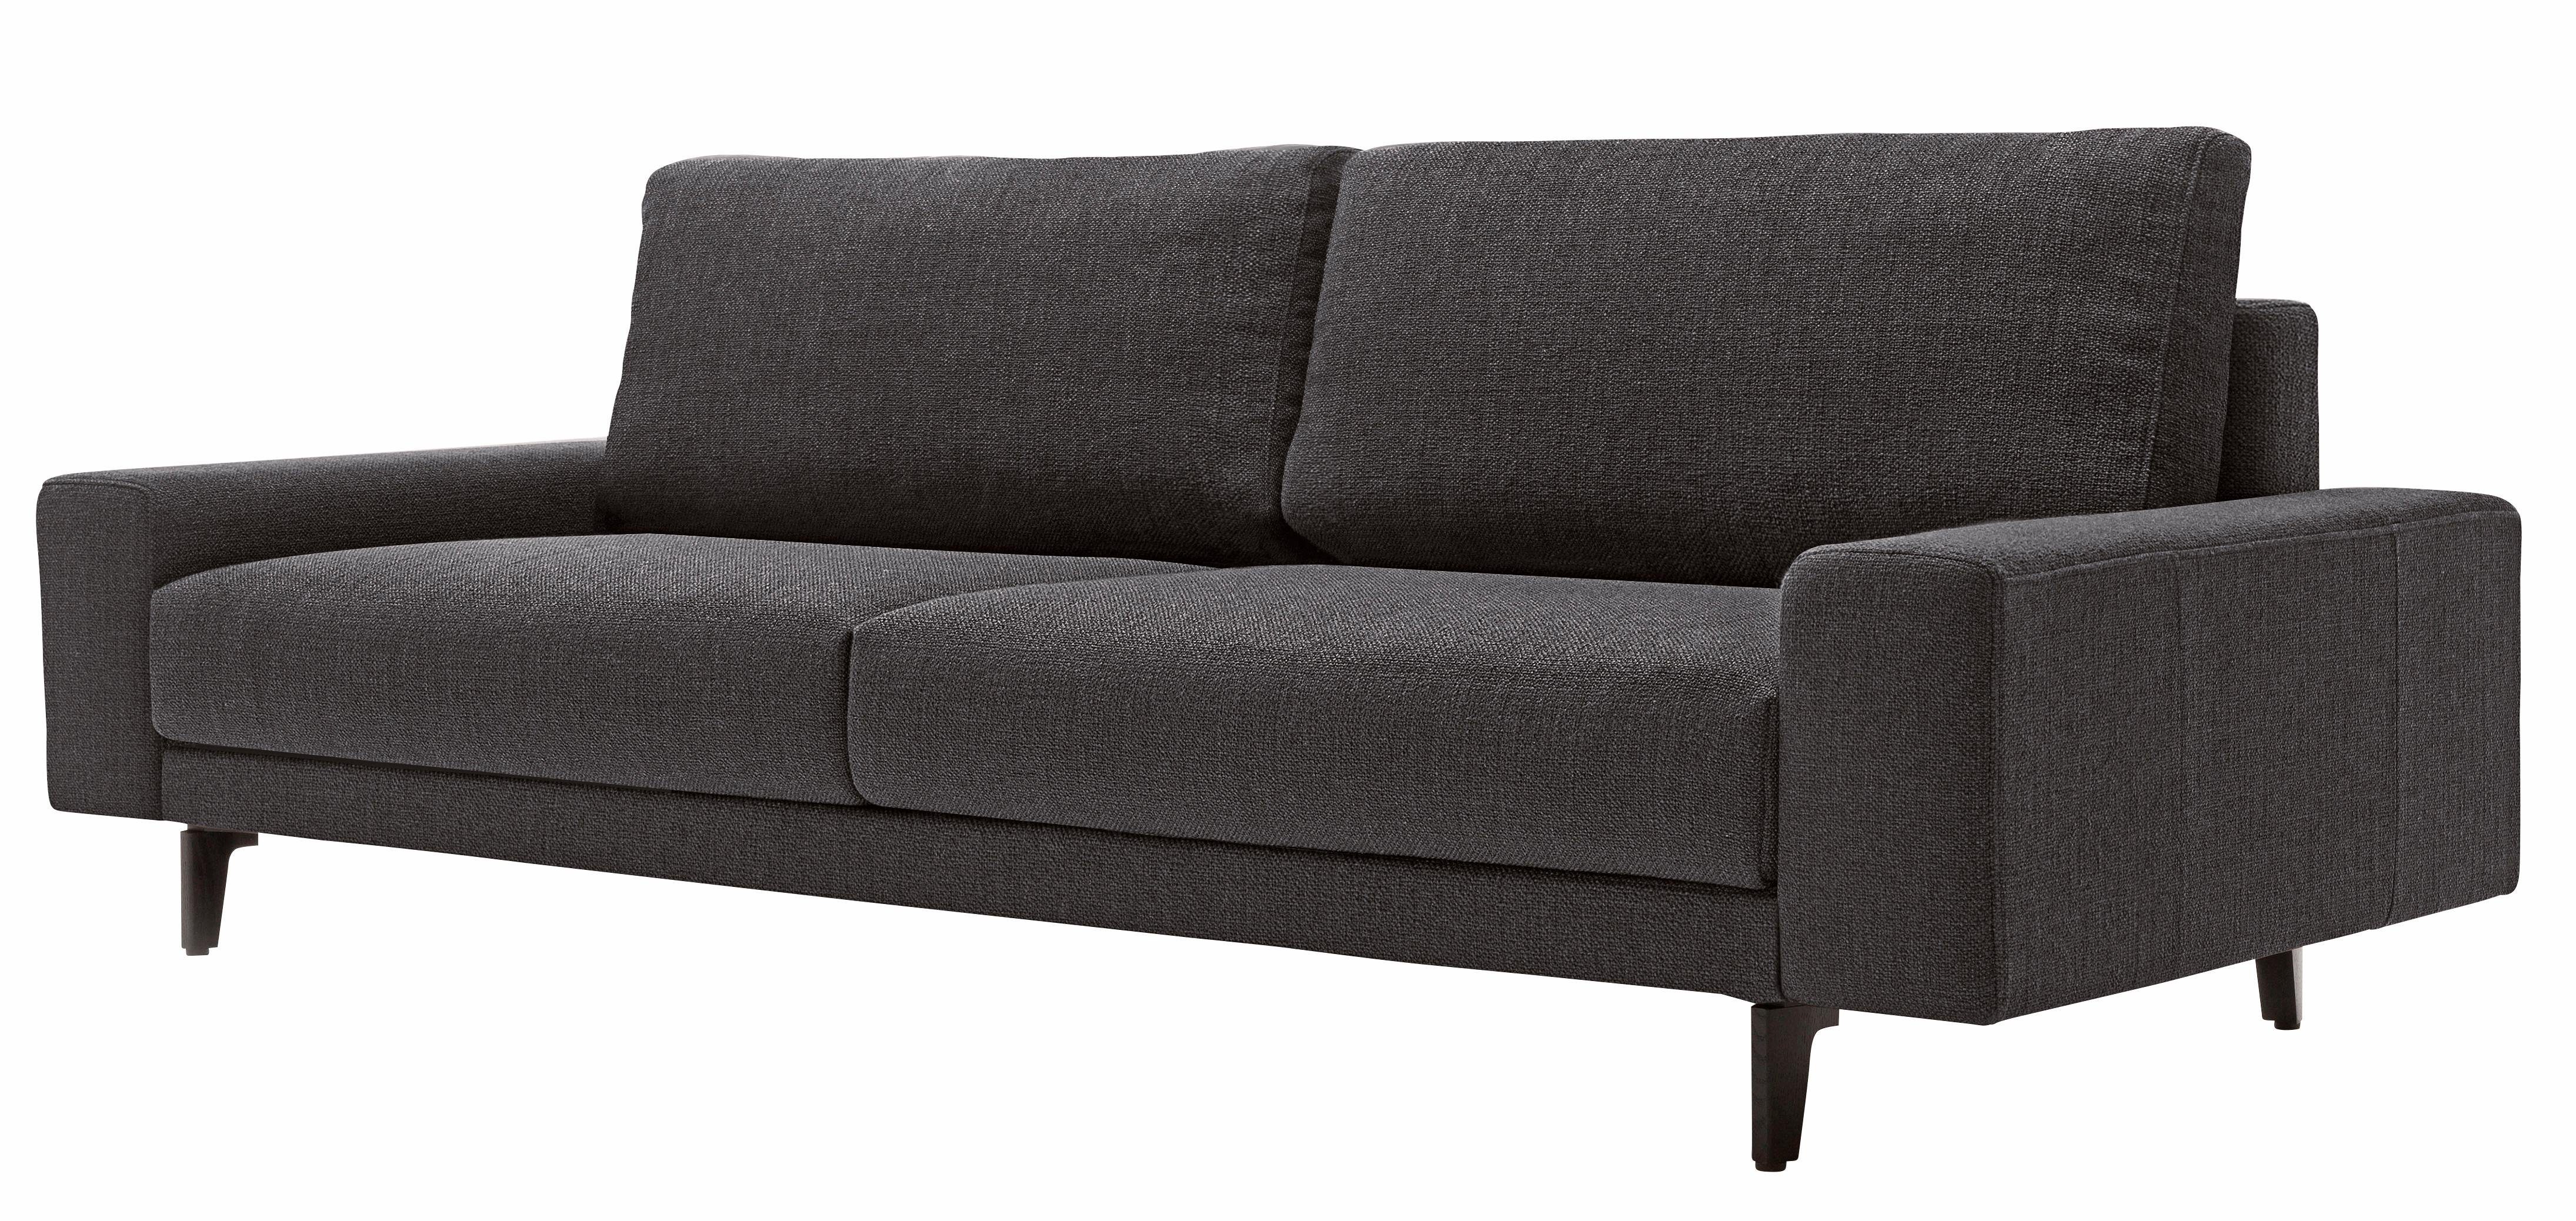 hülsta sofa 3-Sitzer hs.450, Armlehne breit niedrig, Alugussfüße in  umbragrau, Breite 220 cm